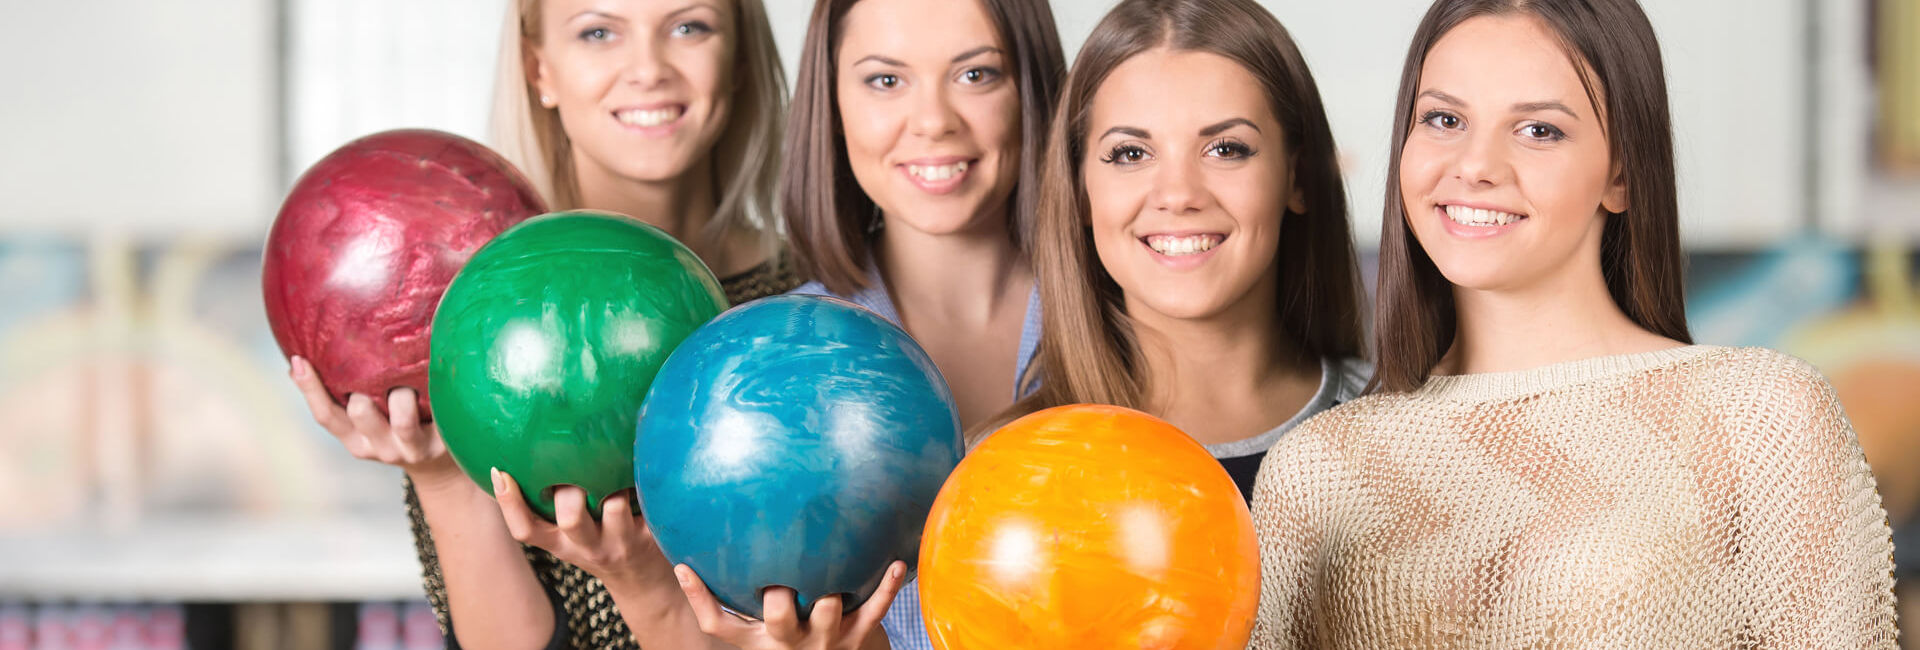 Four women holding a bowling ball